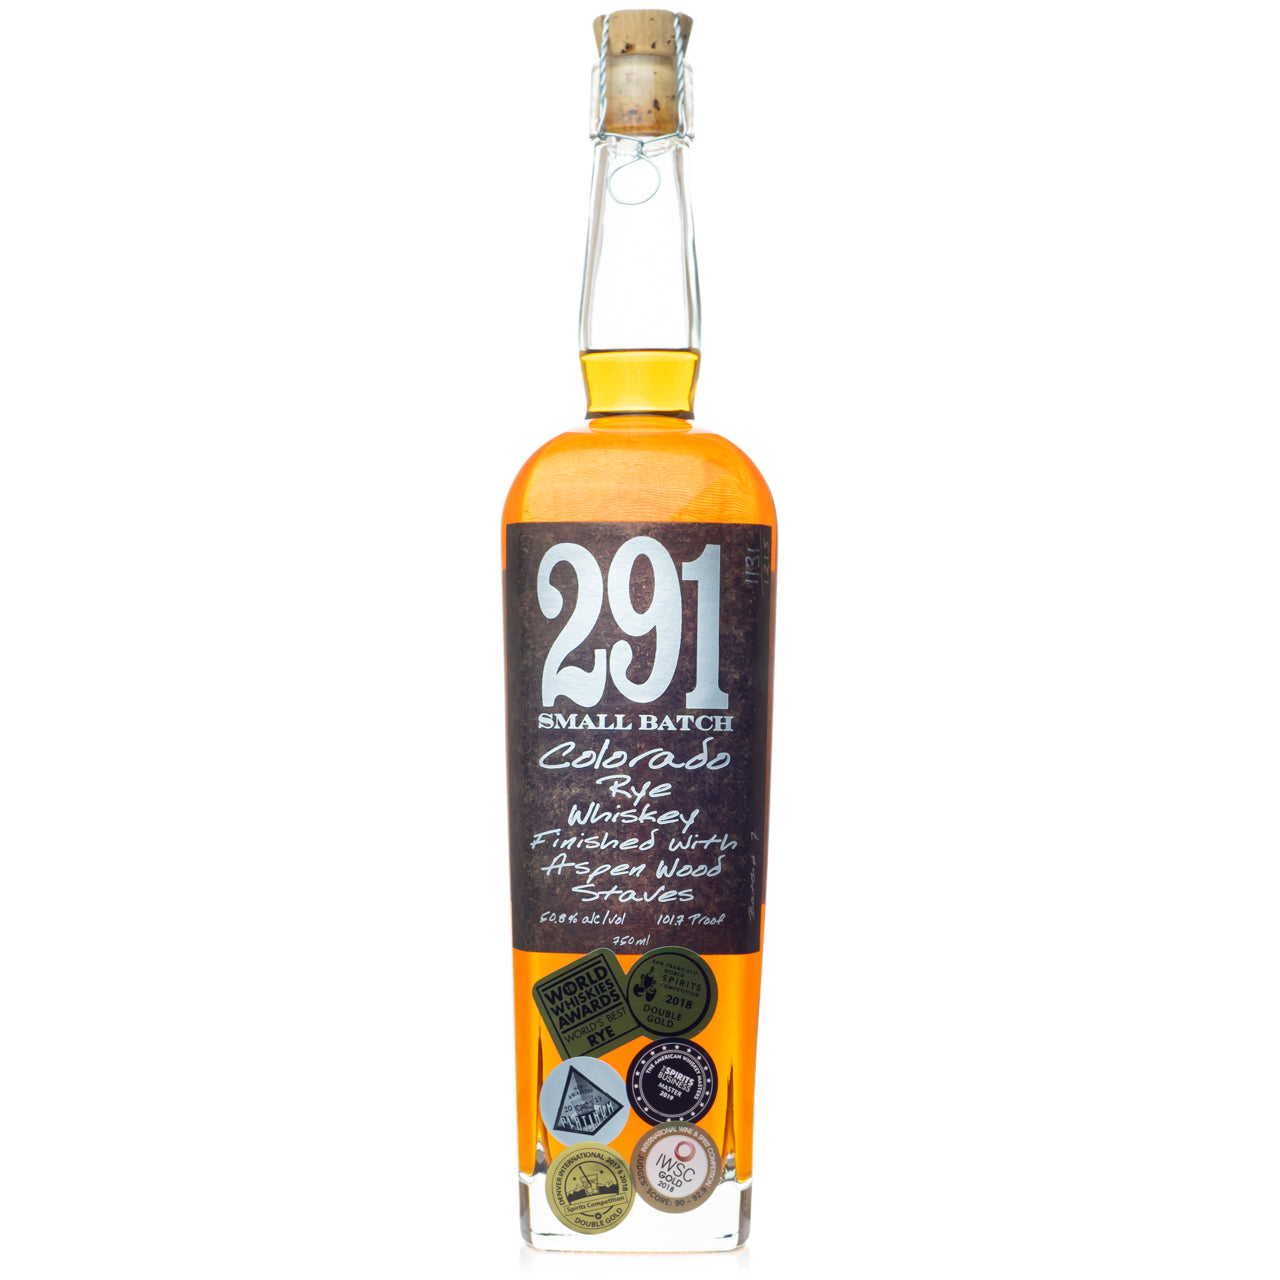 291 Small Batch Colorado Rye Whiskey